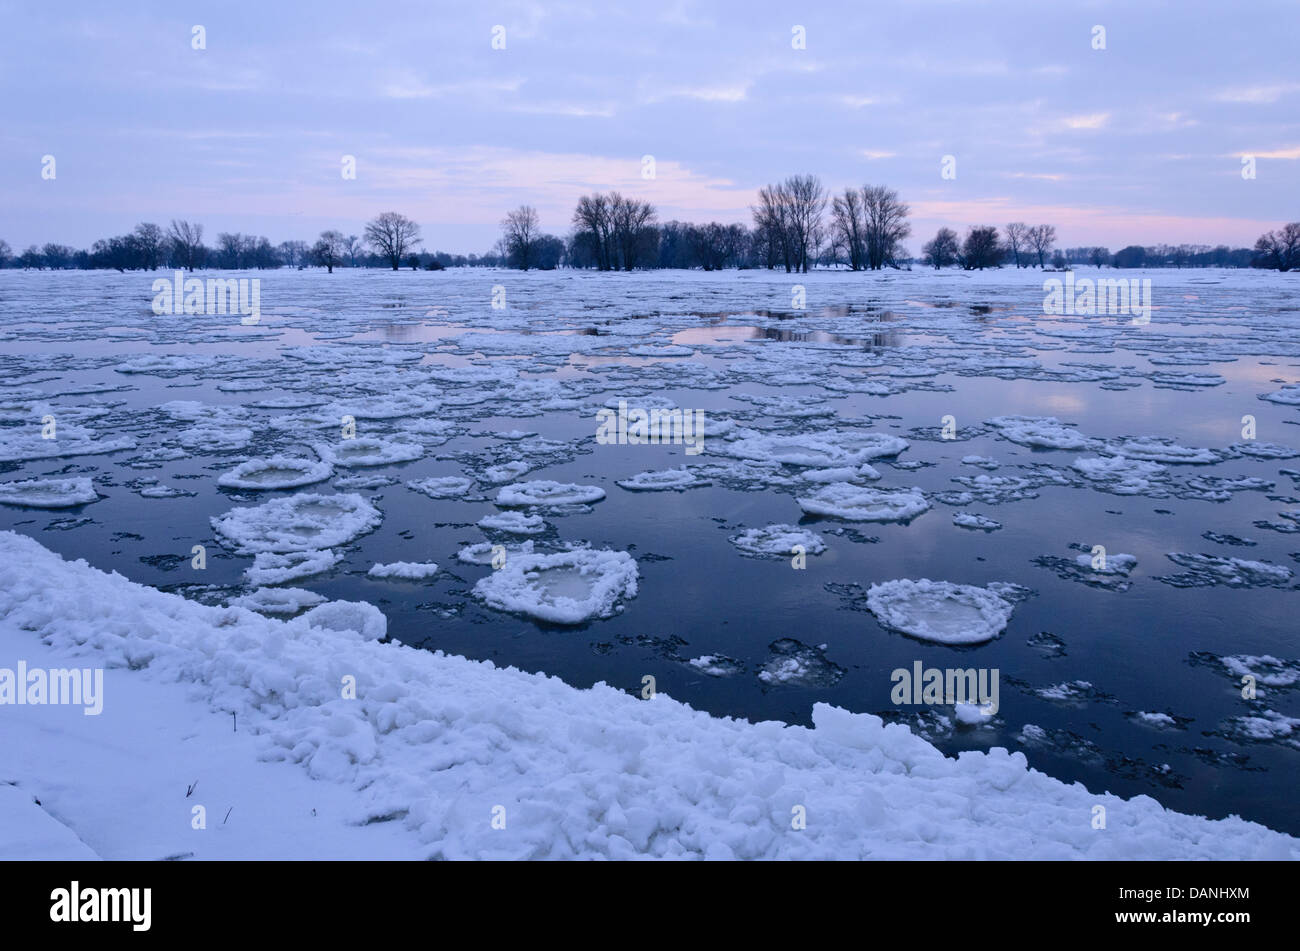 Drifting ice on Elbe River, Flusslandschaft Elbe Biosphere Reserve, Germany Stock Photo